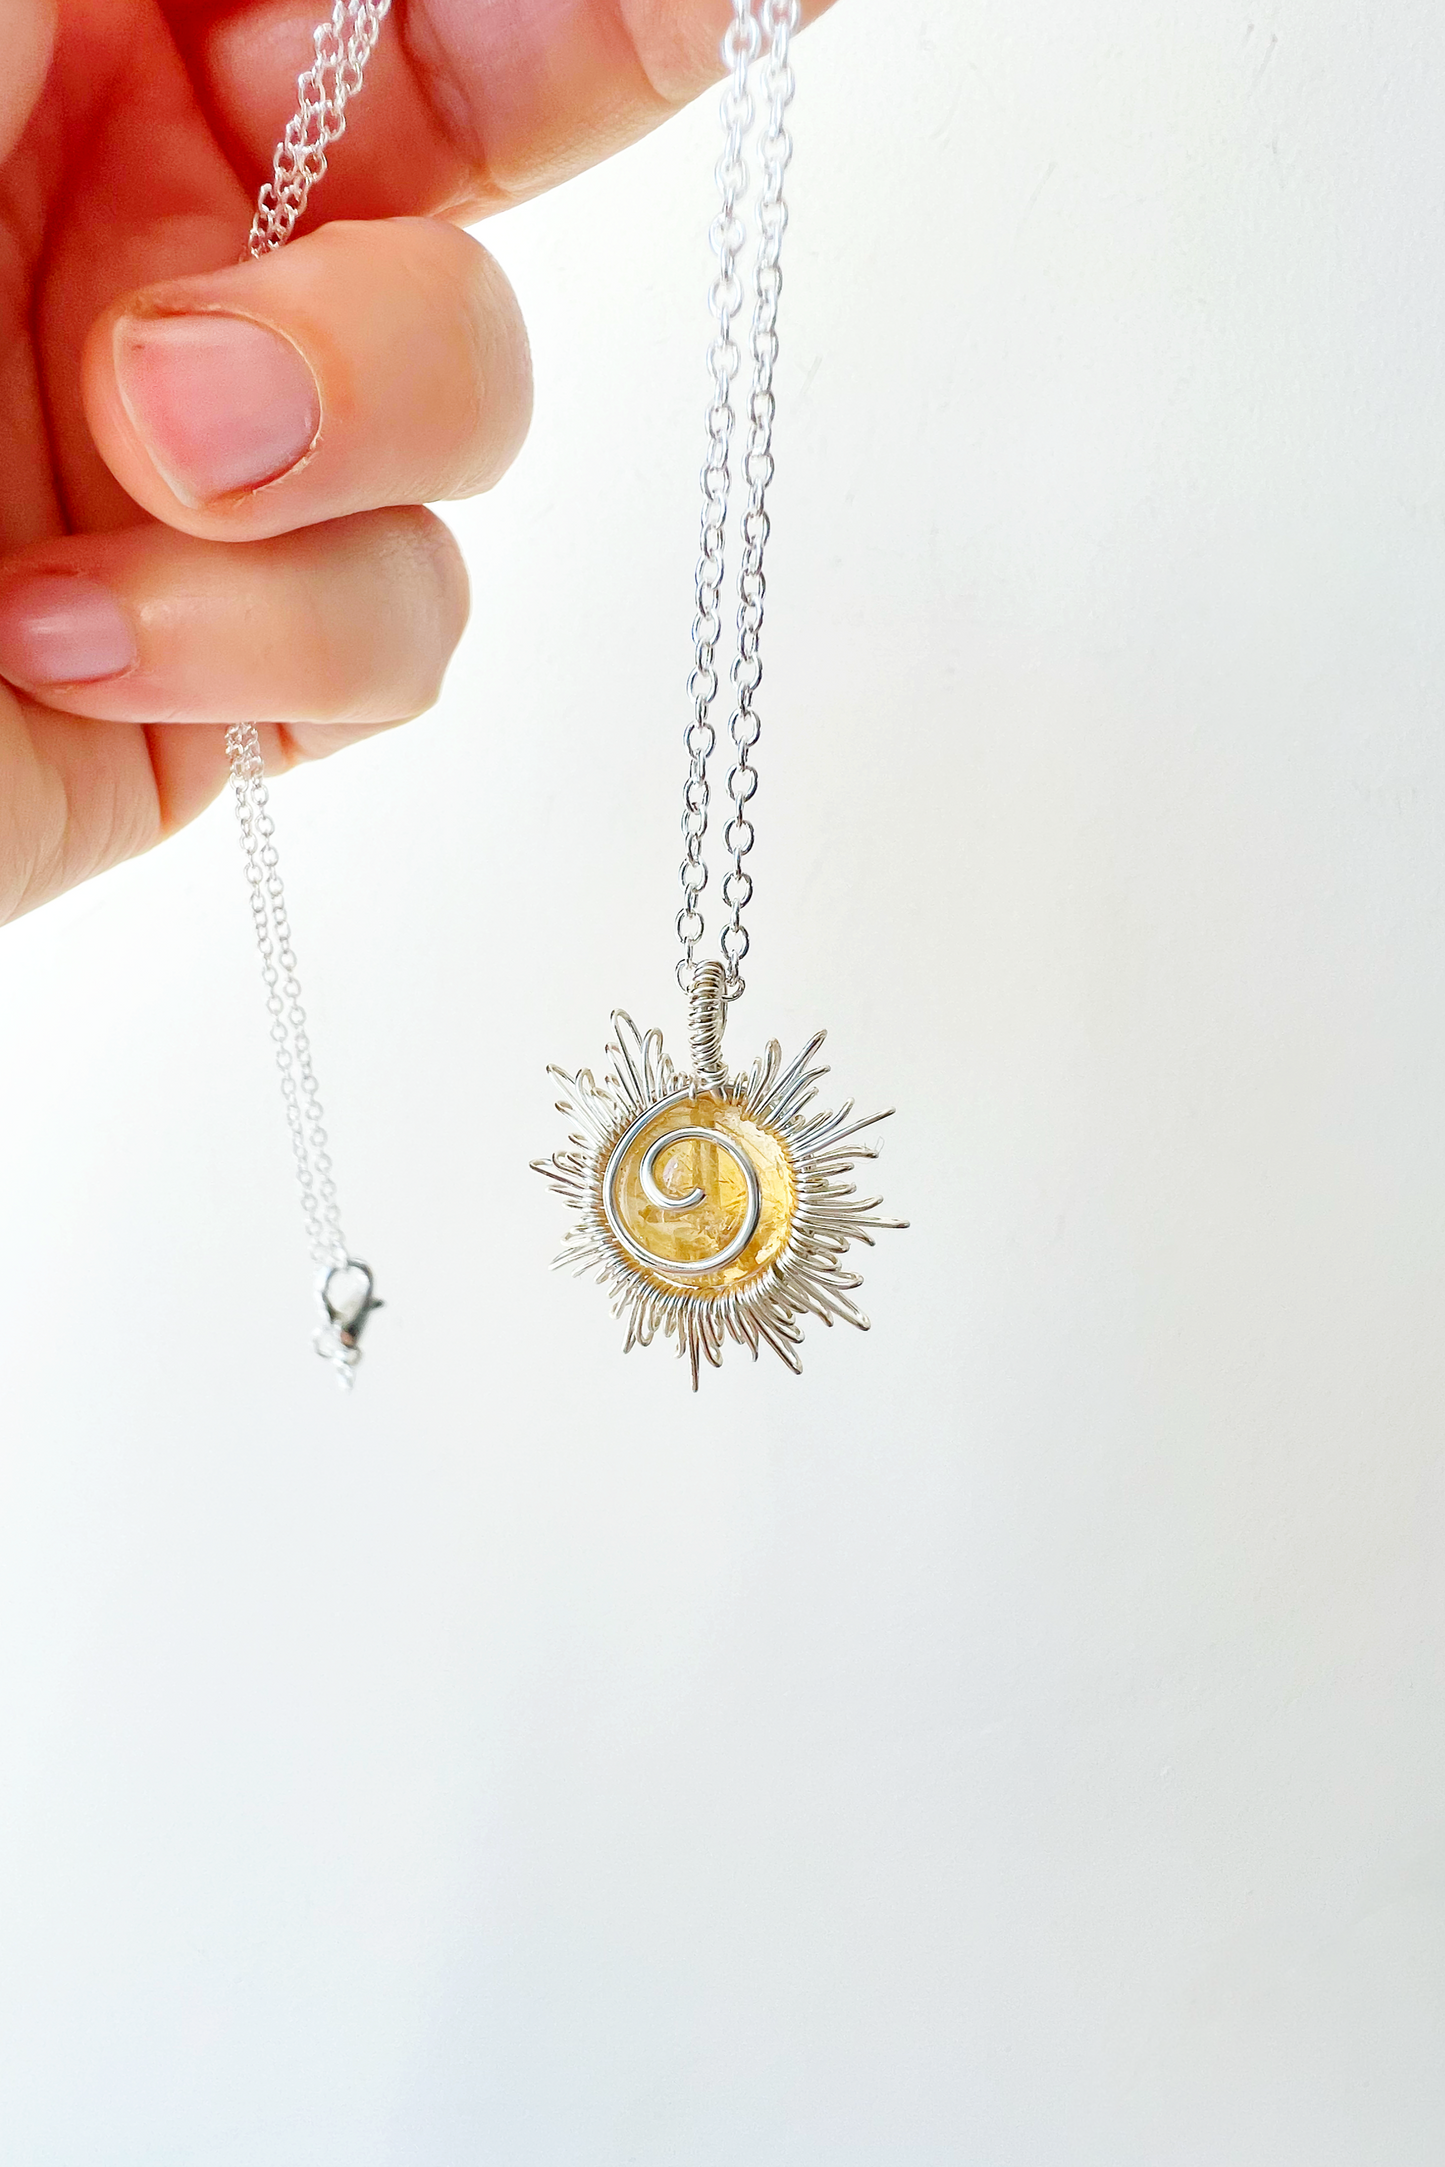 Sunburst Necklace - citrine and silver